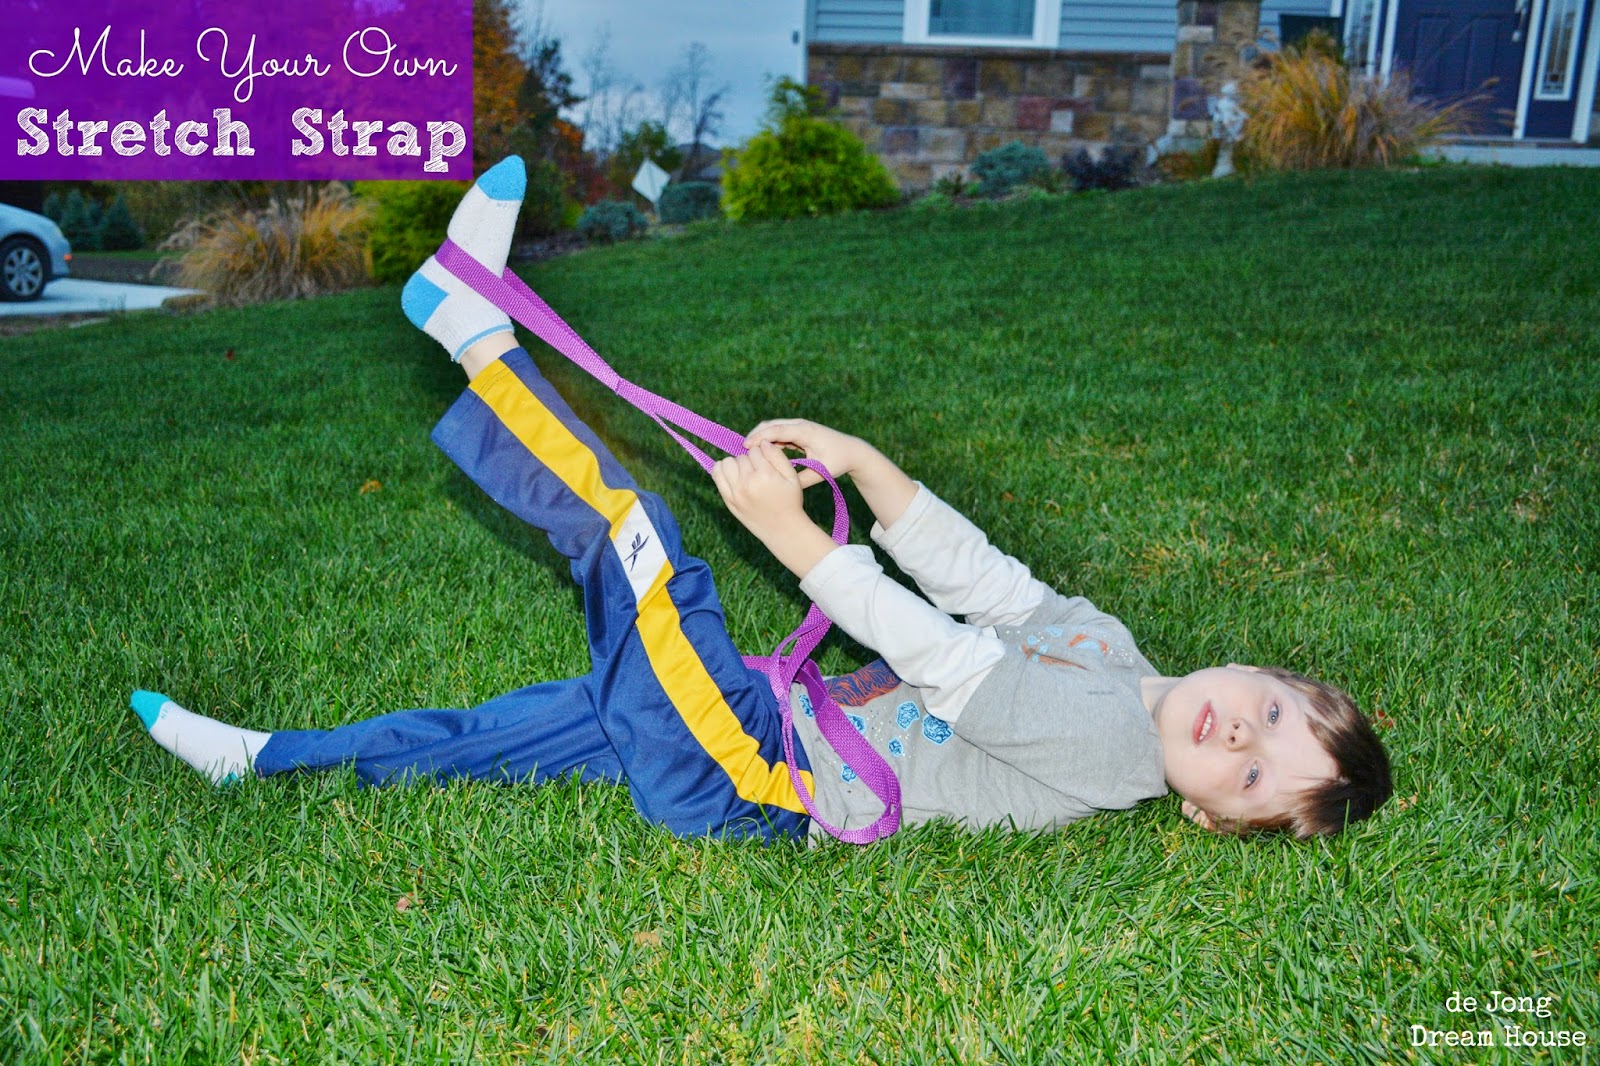 de Jong Dream House: Make Your Own Stretch Strap